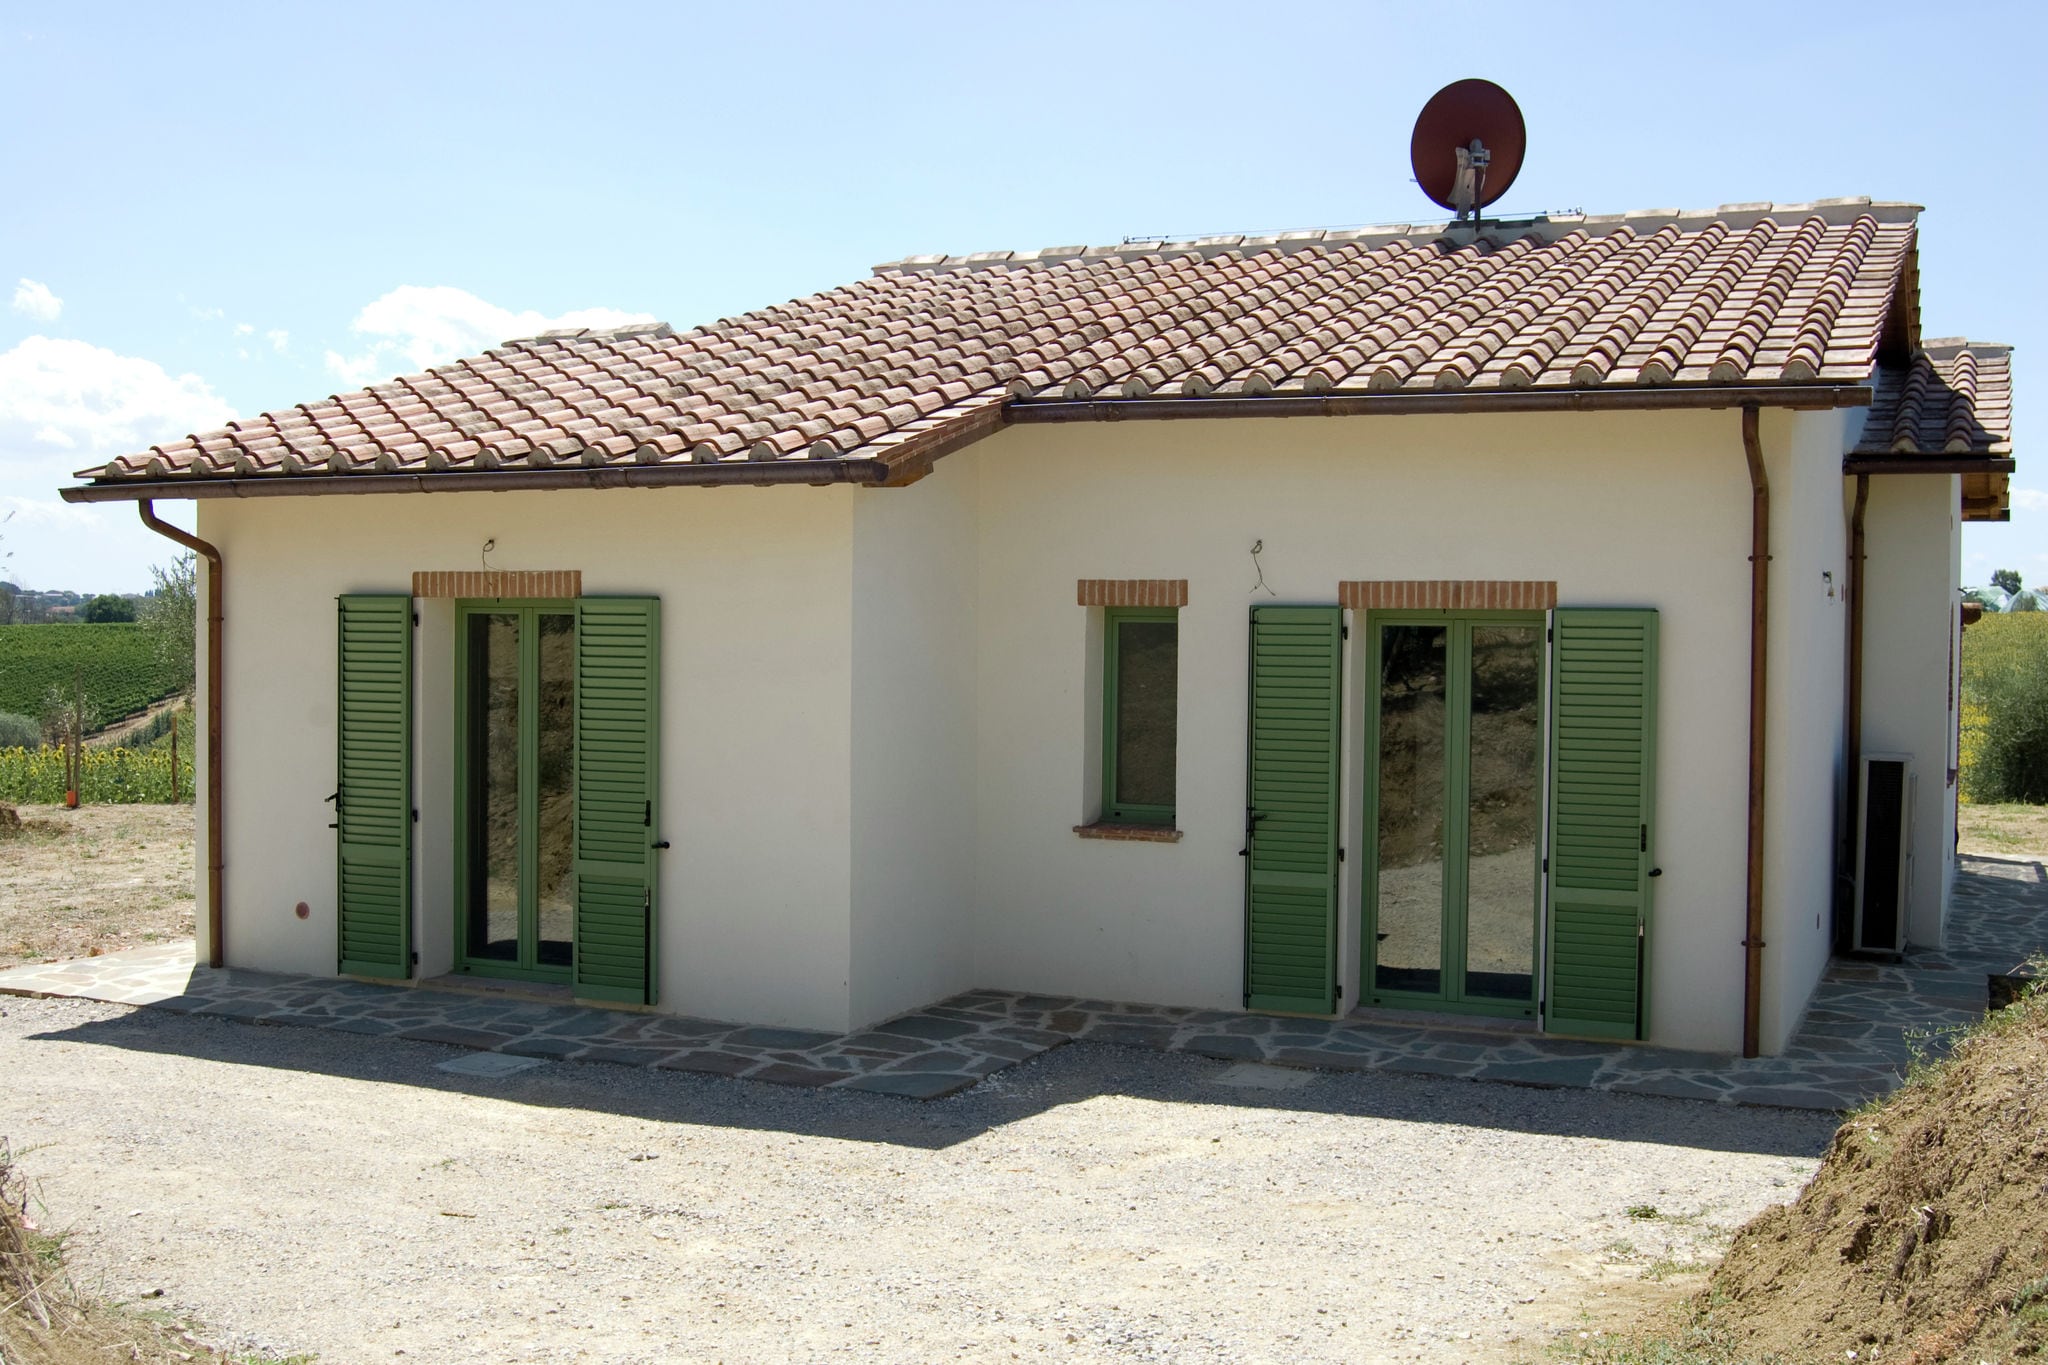 Idyllic Cottage in Cortona with Swimming Pool